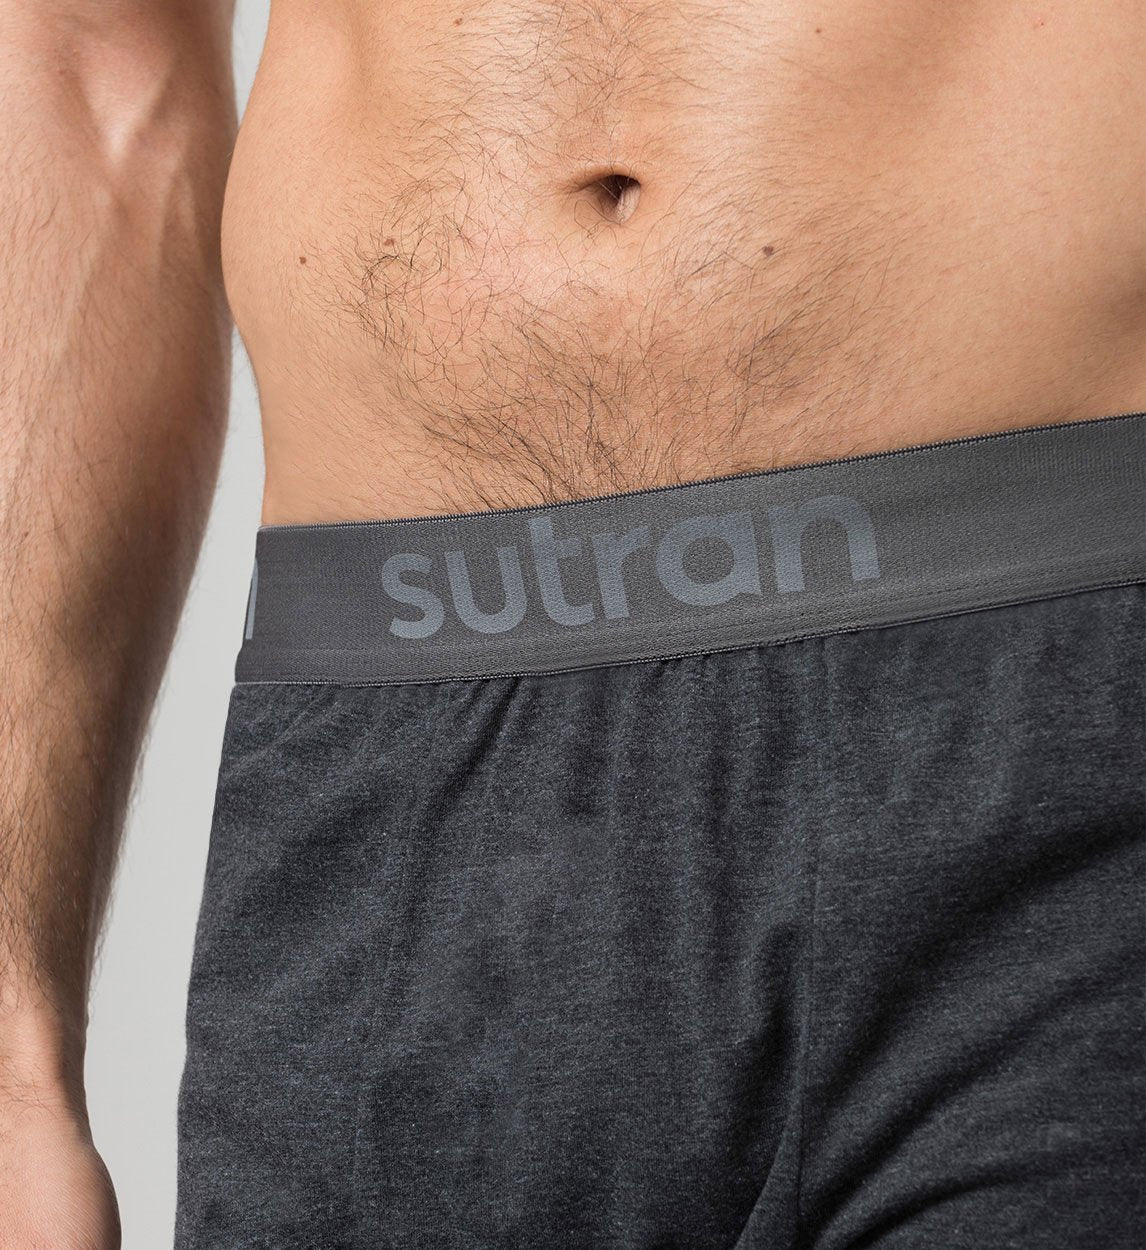 Sweat Proof Boxer Shorts Dark Grey / Dark Grey - Sutran Technology